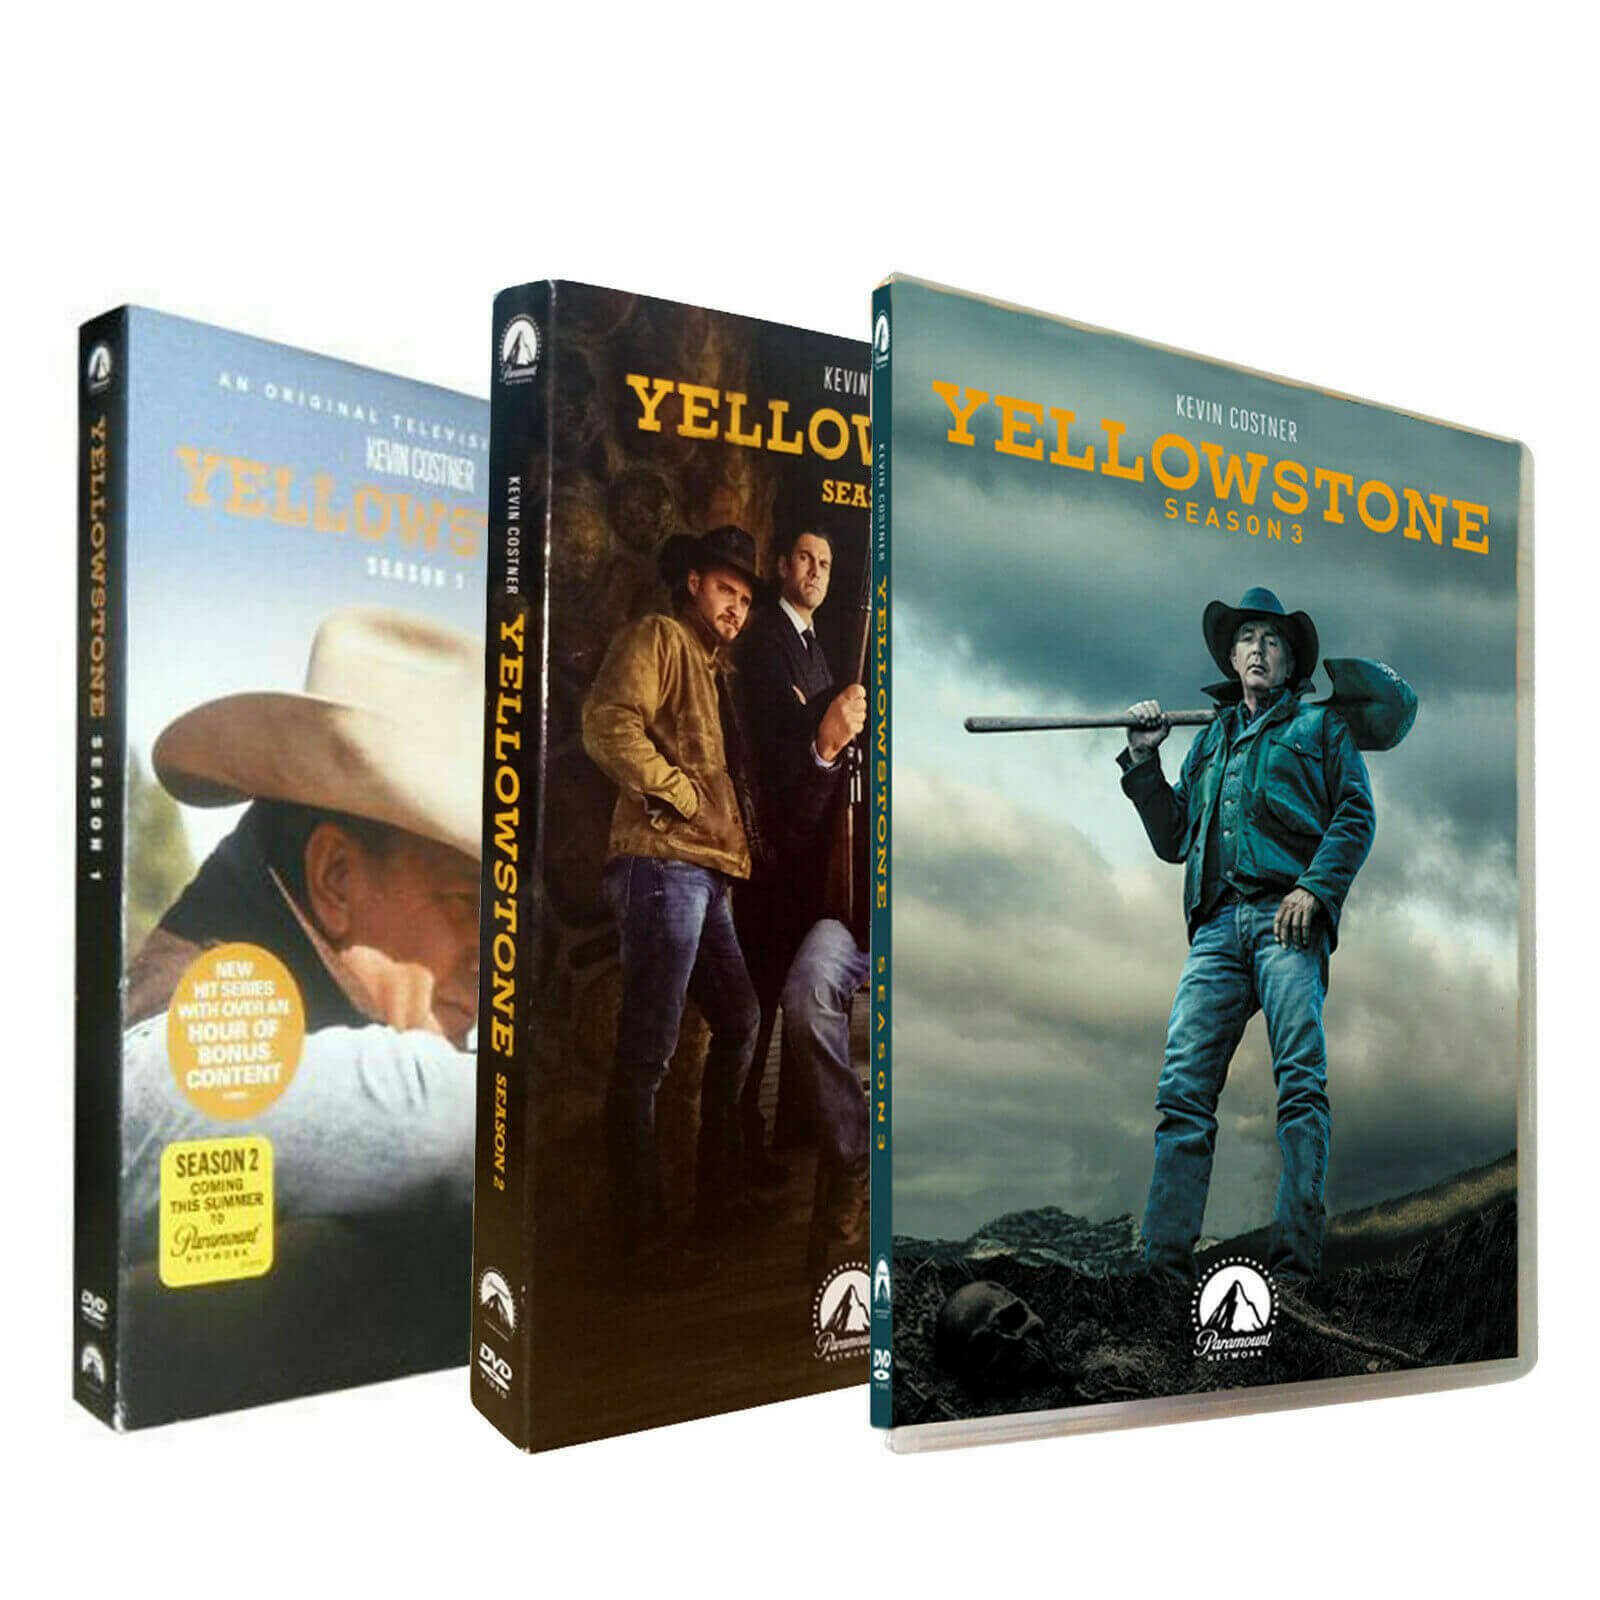 Yellowstone : The Complete Series Season 1-3 1 2 3 Blu-ray&DVD